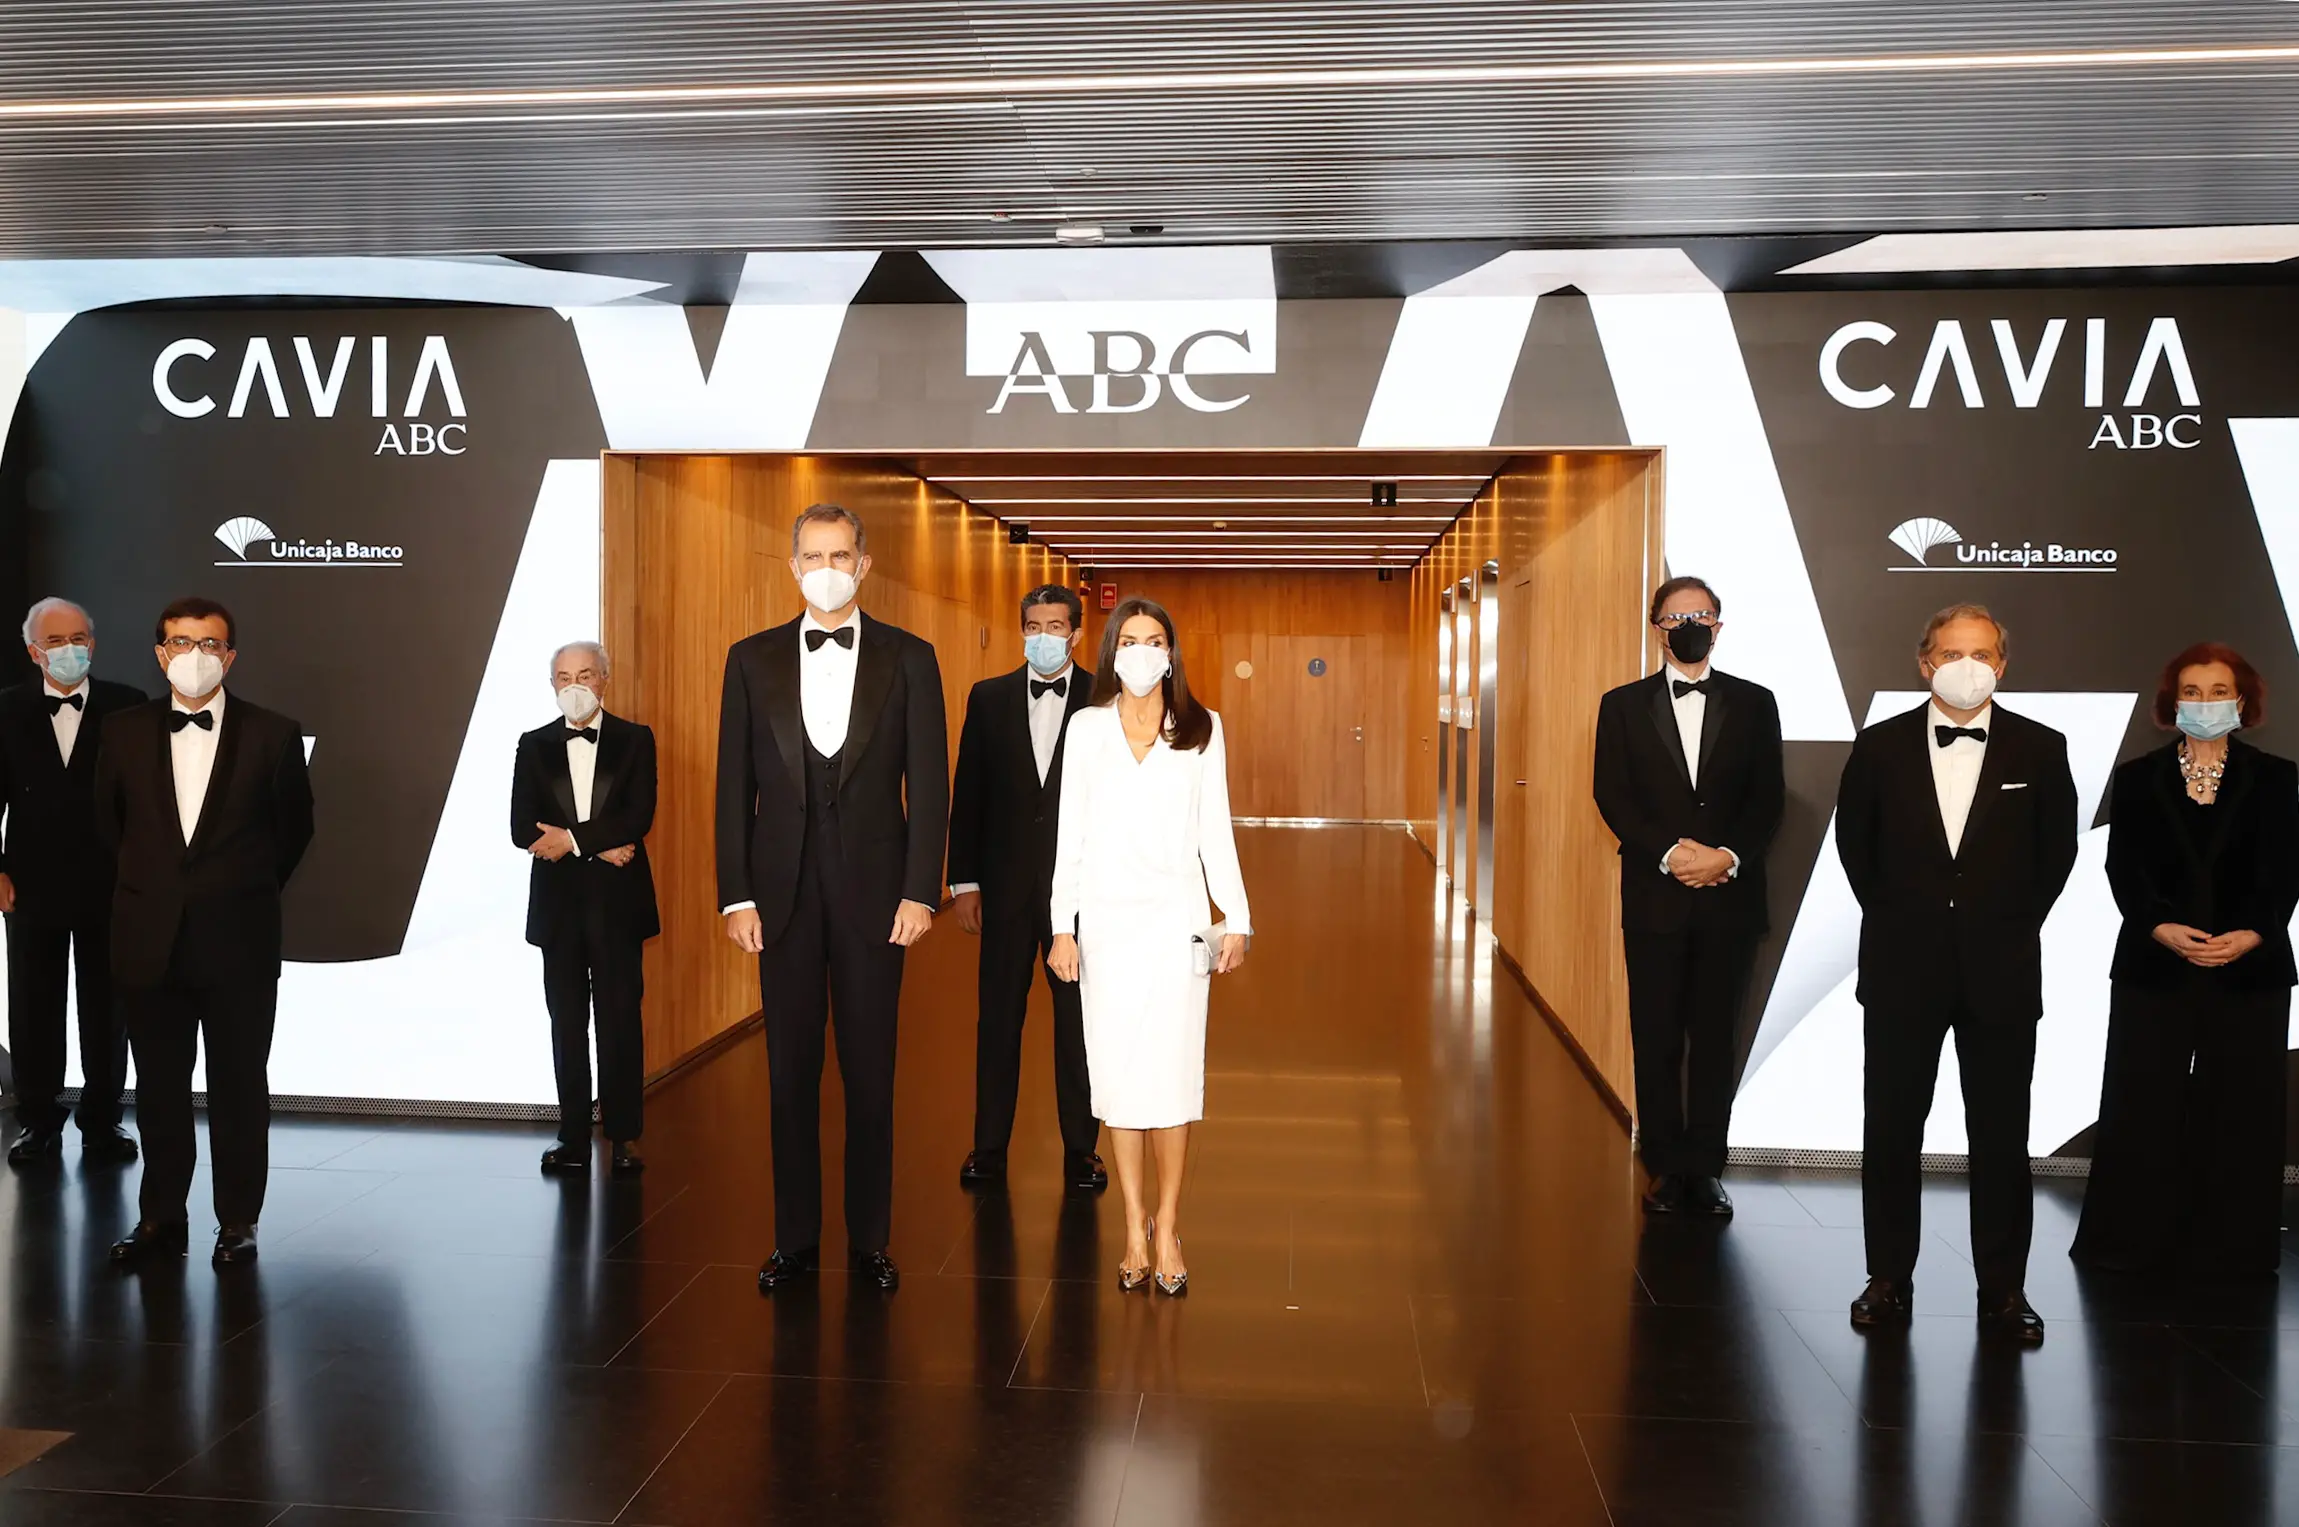 King Felipe and Queen Letizia presented ABC Awards